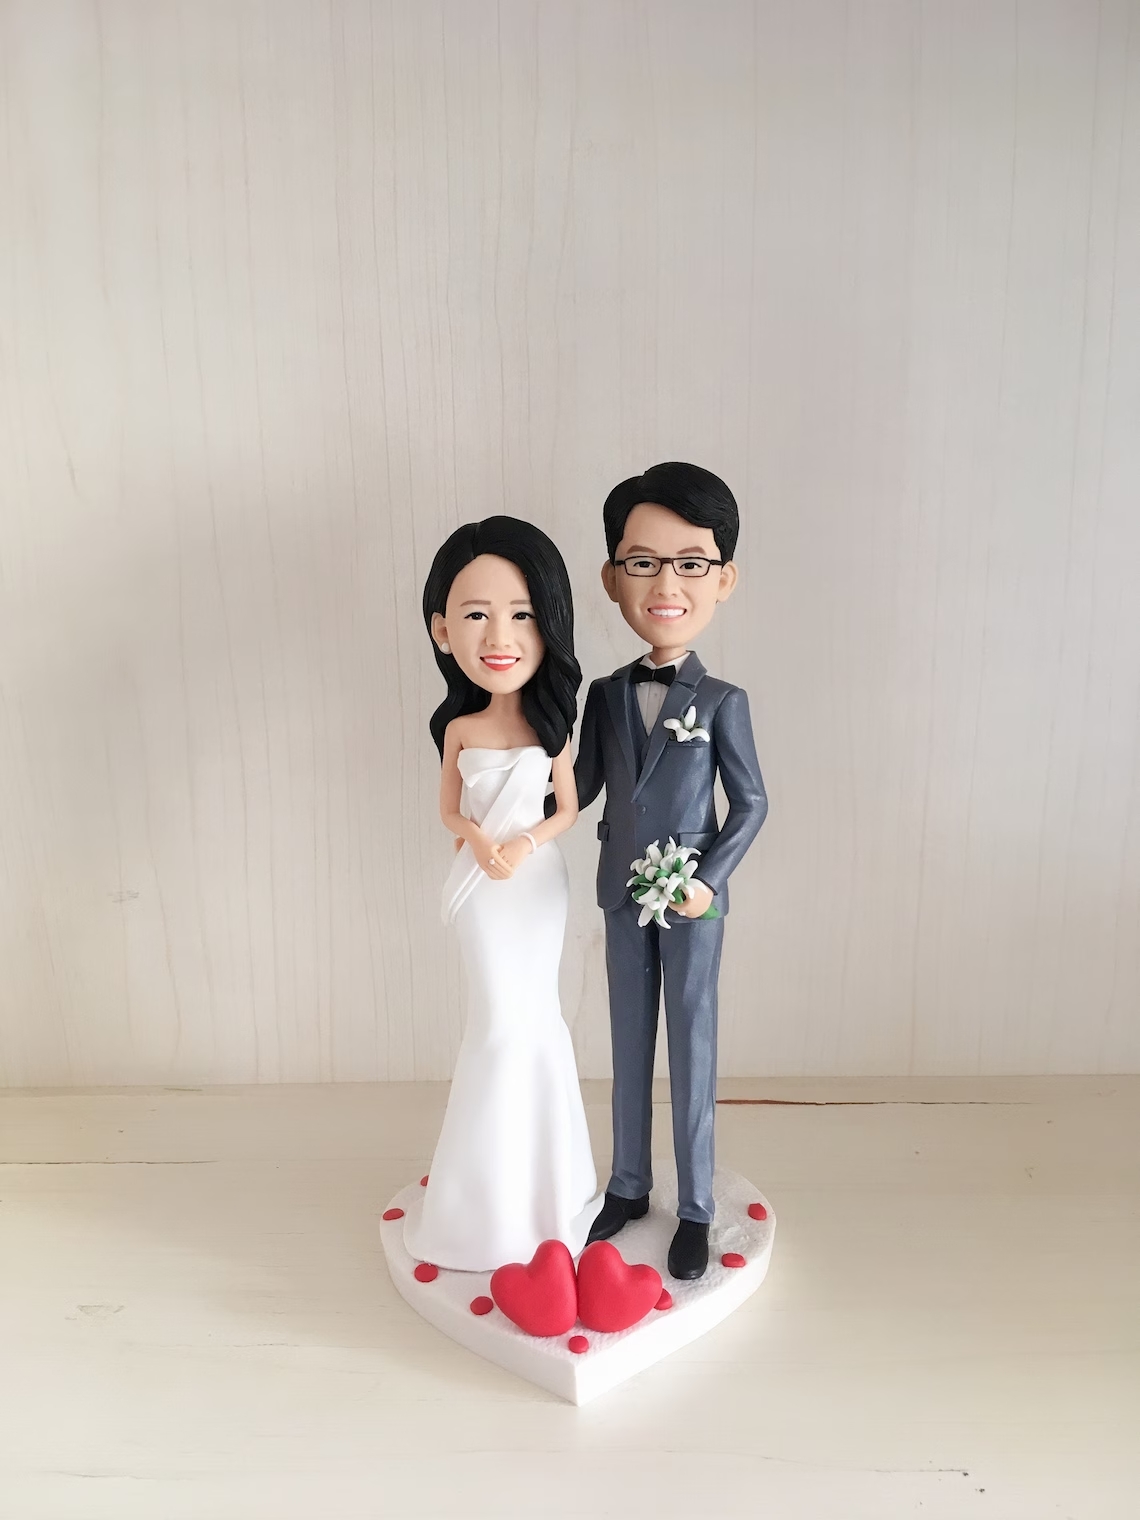 Why Custom Wedding Bobbleheads are the Perfect Wedding Souvenir?